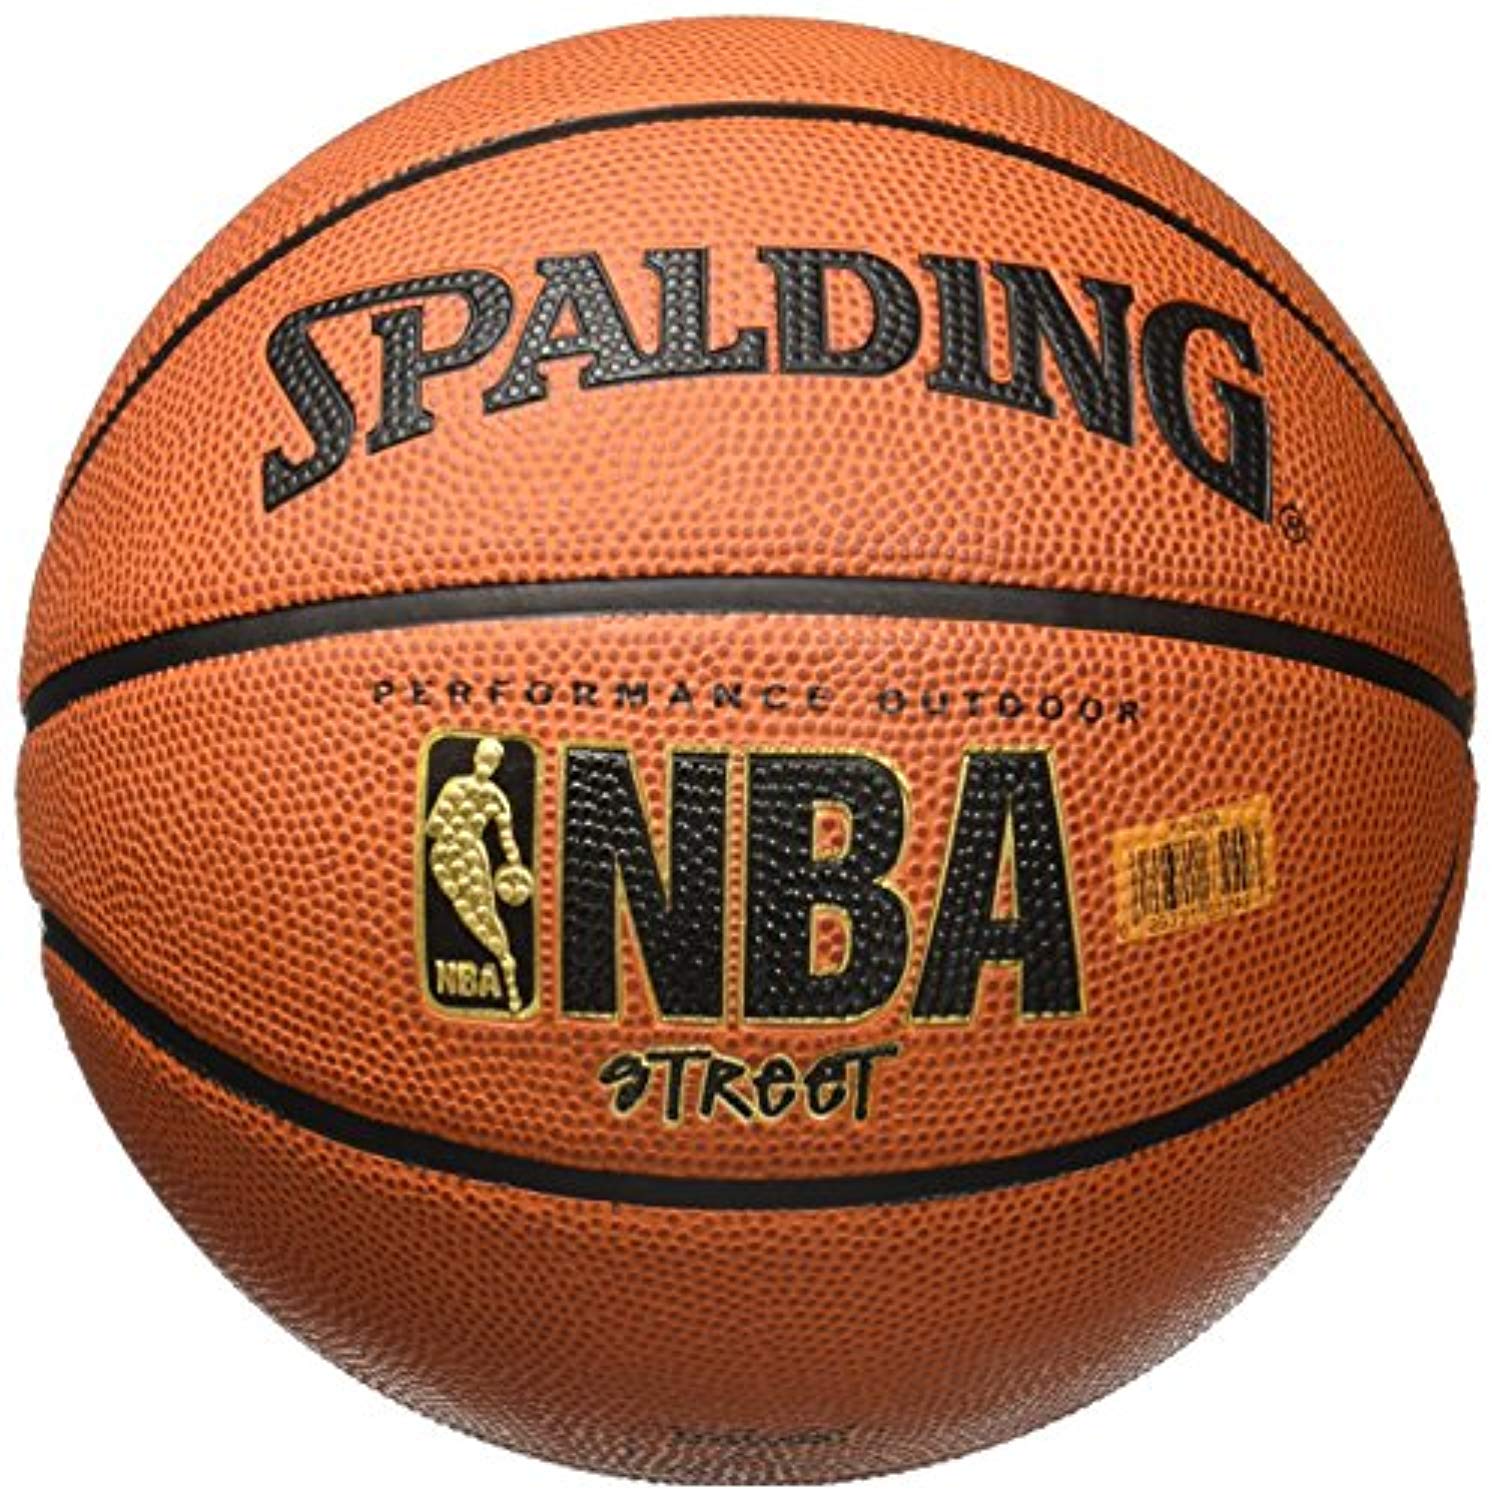 NBA Street Basketball